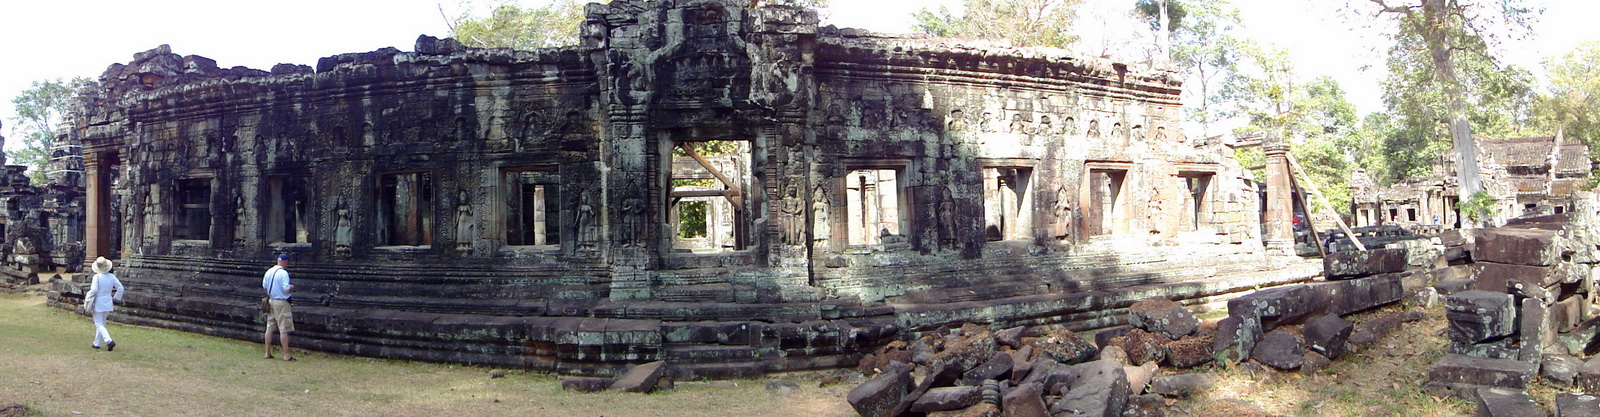 C Banteay Kdei Temple hall of dancers Angkor Jan 2010 01